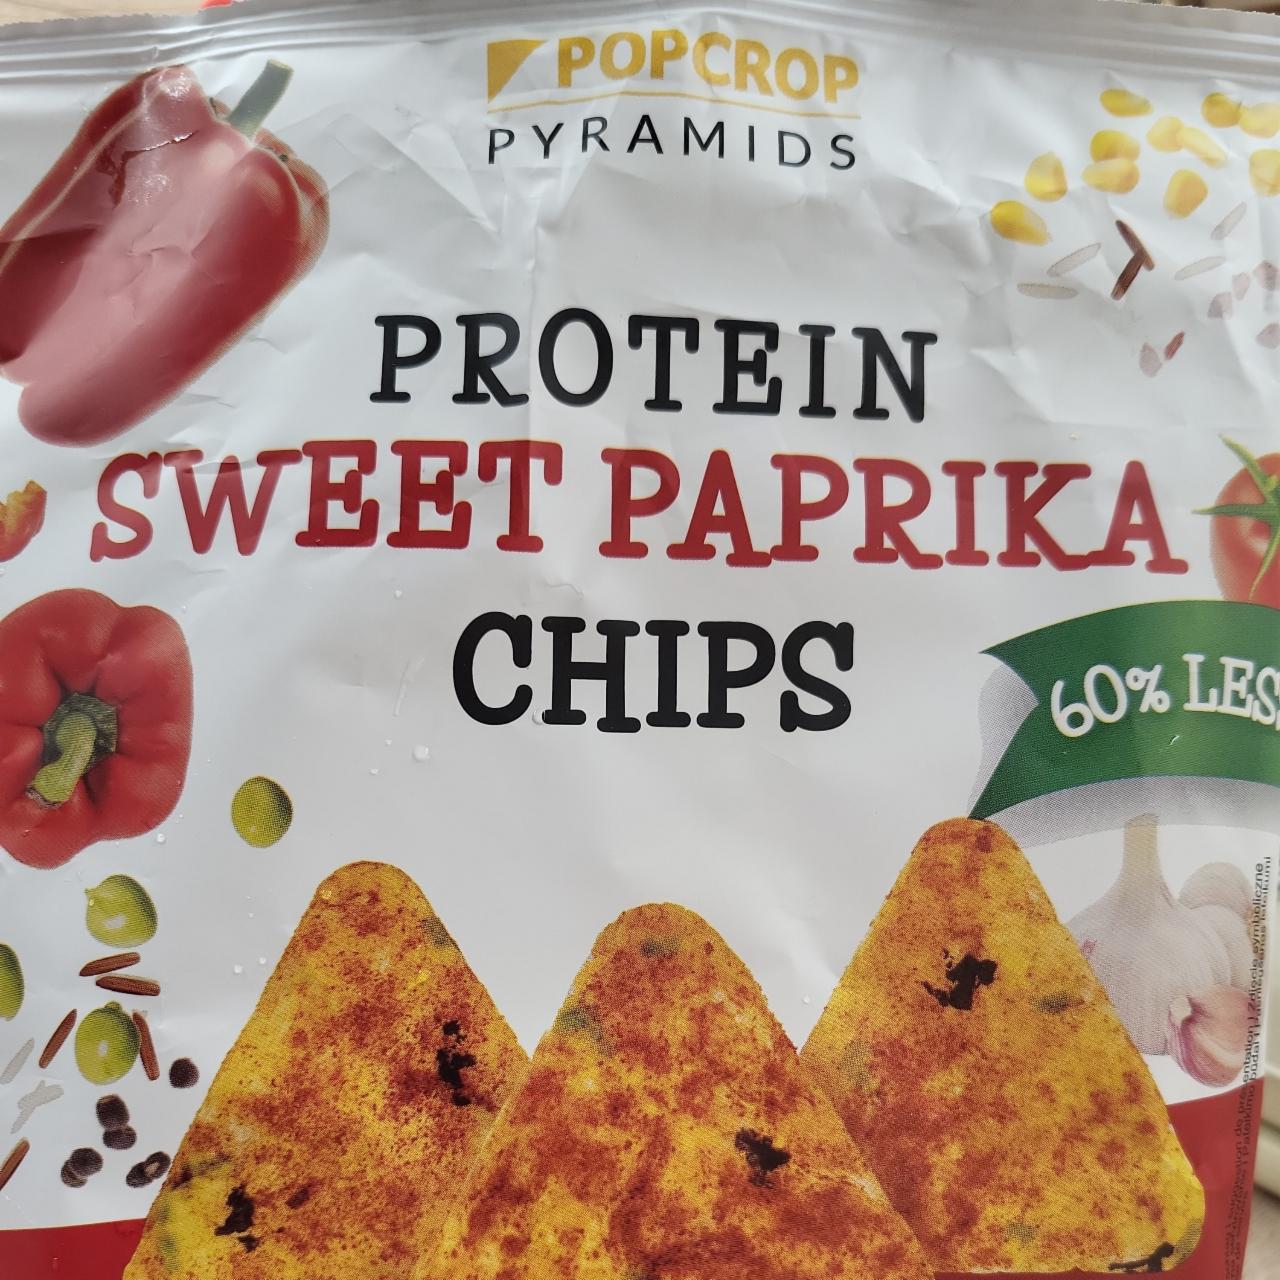 Fotografie - Protein sweet paprika chips Popcrop pyramids